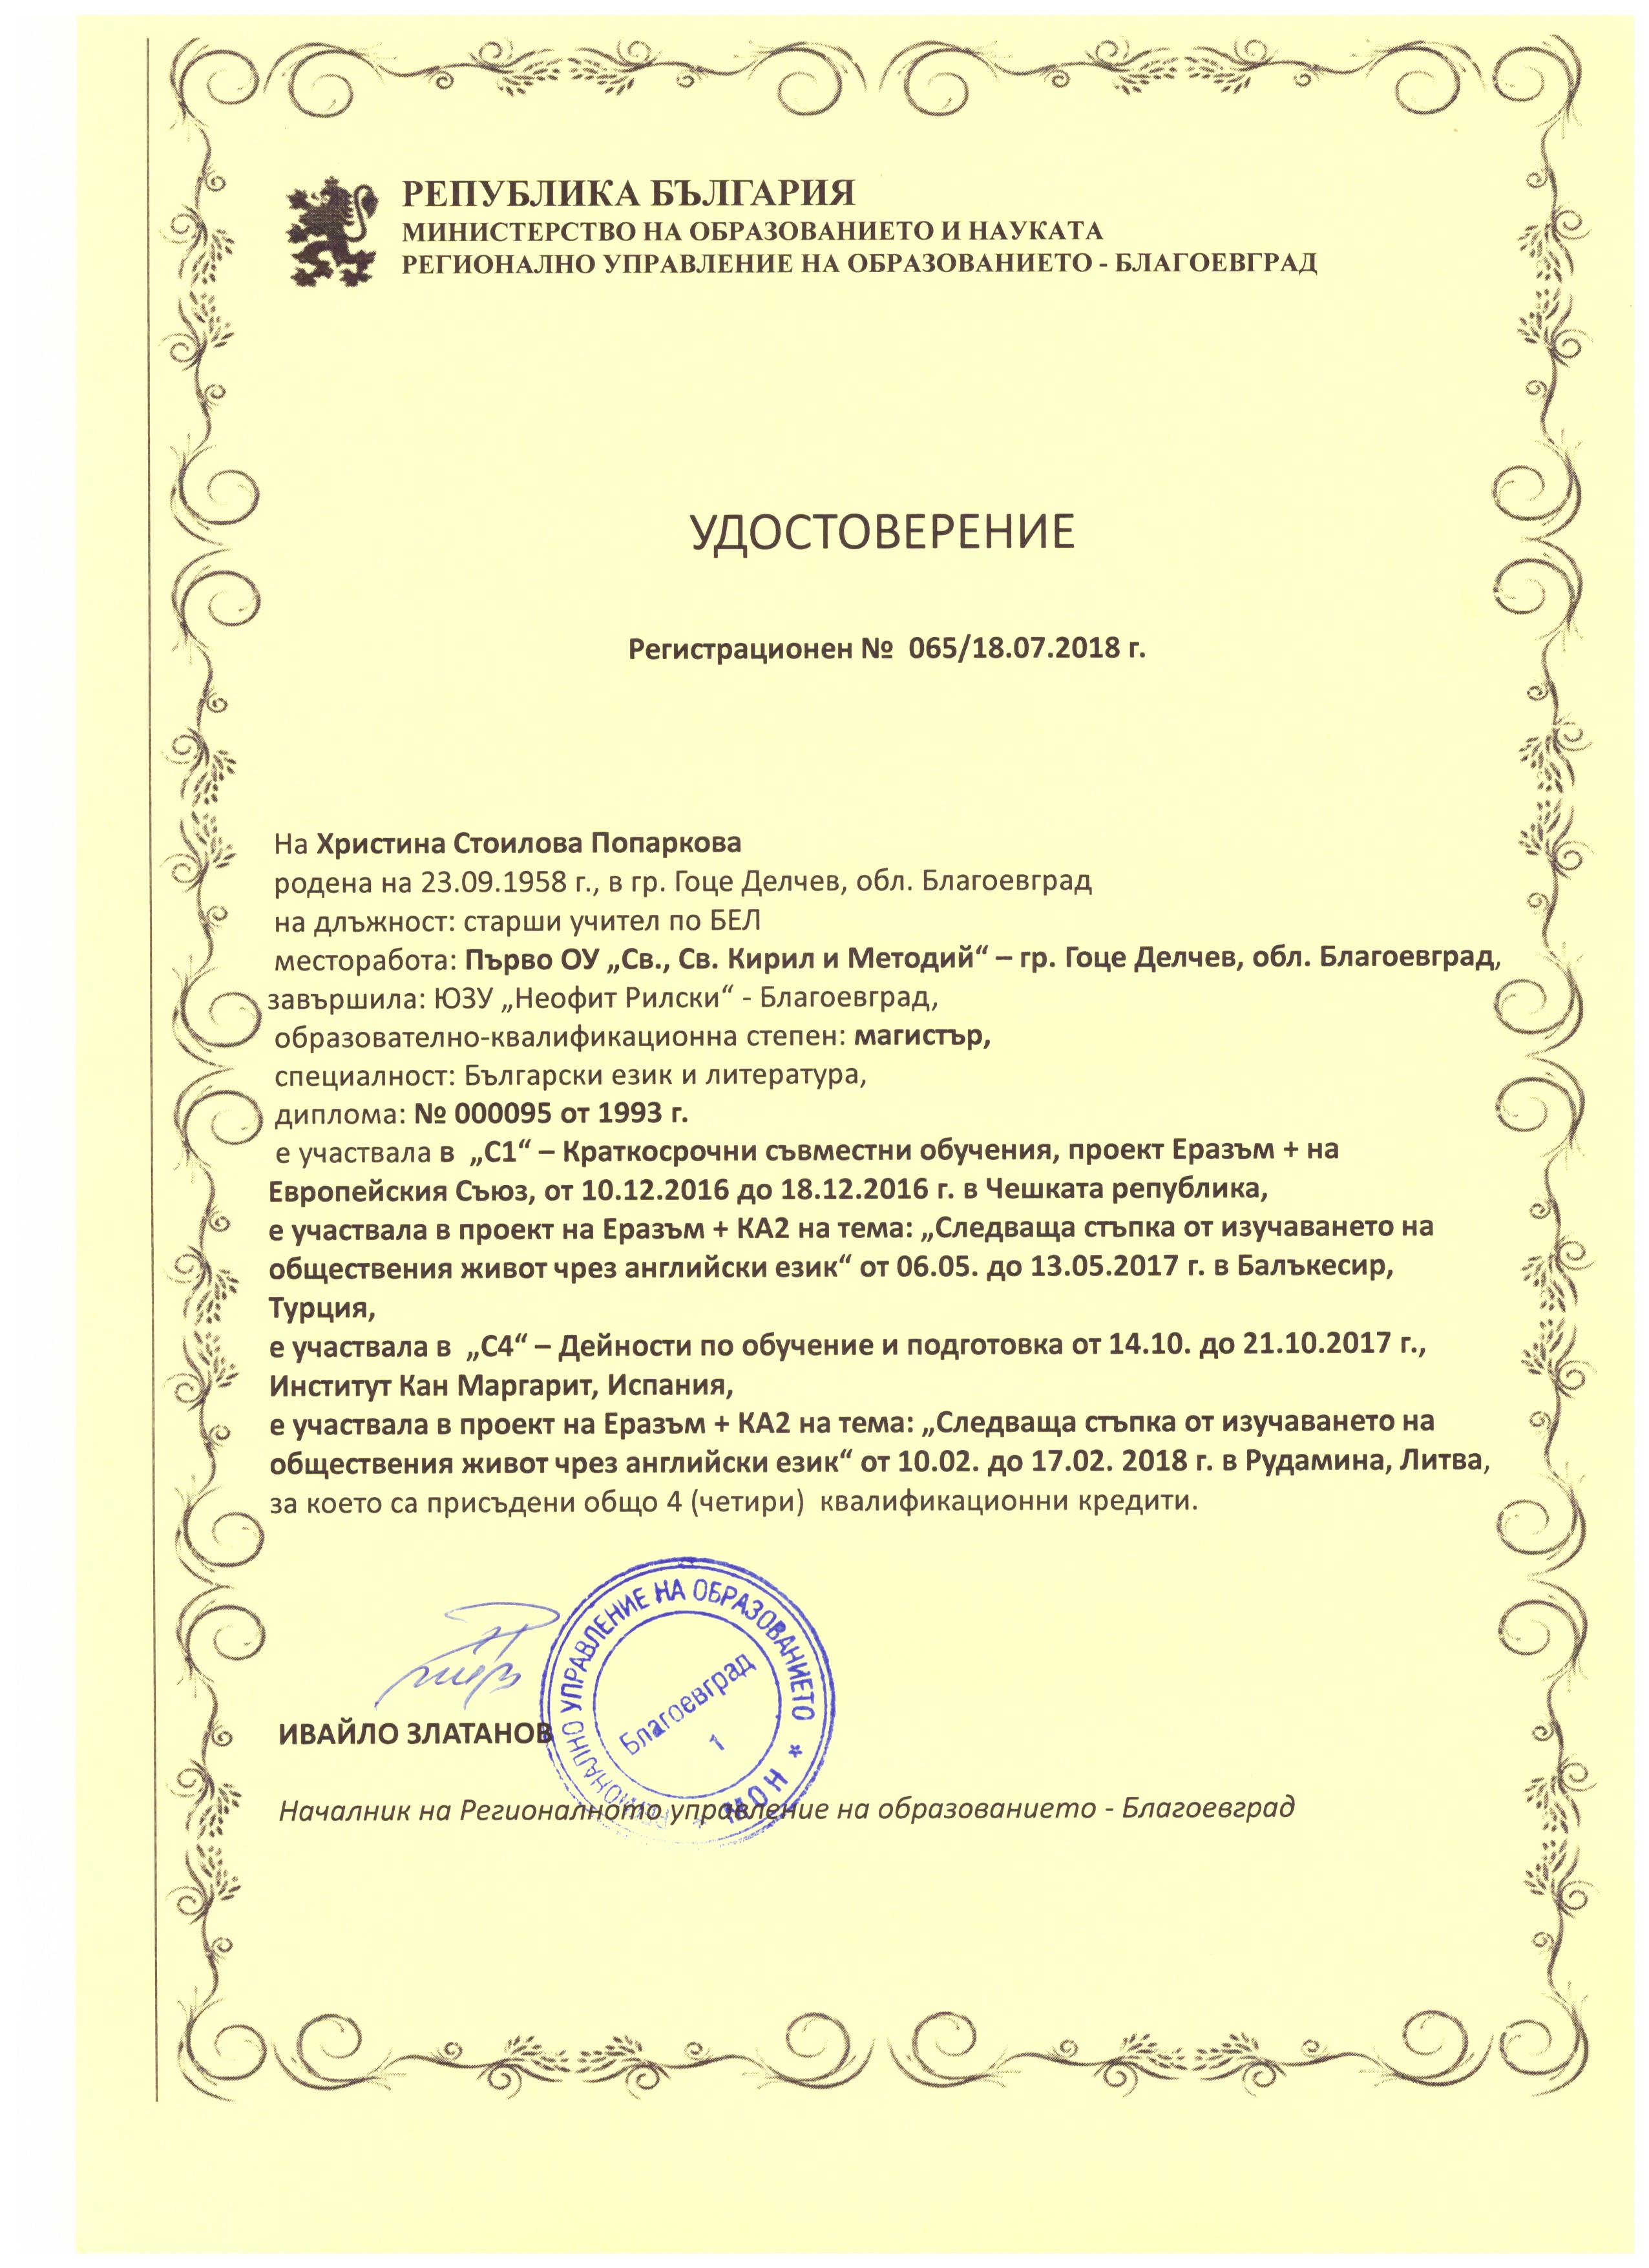 Hristina Poparkova - 4 ualificaion credits from Regional Education Directorat